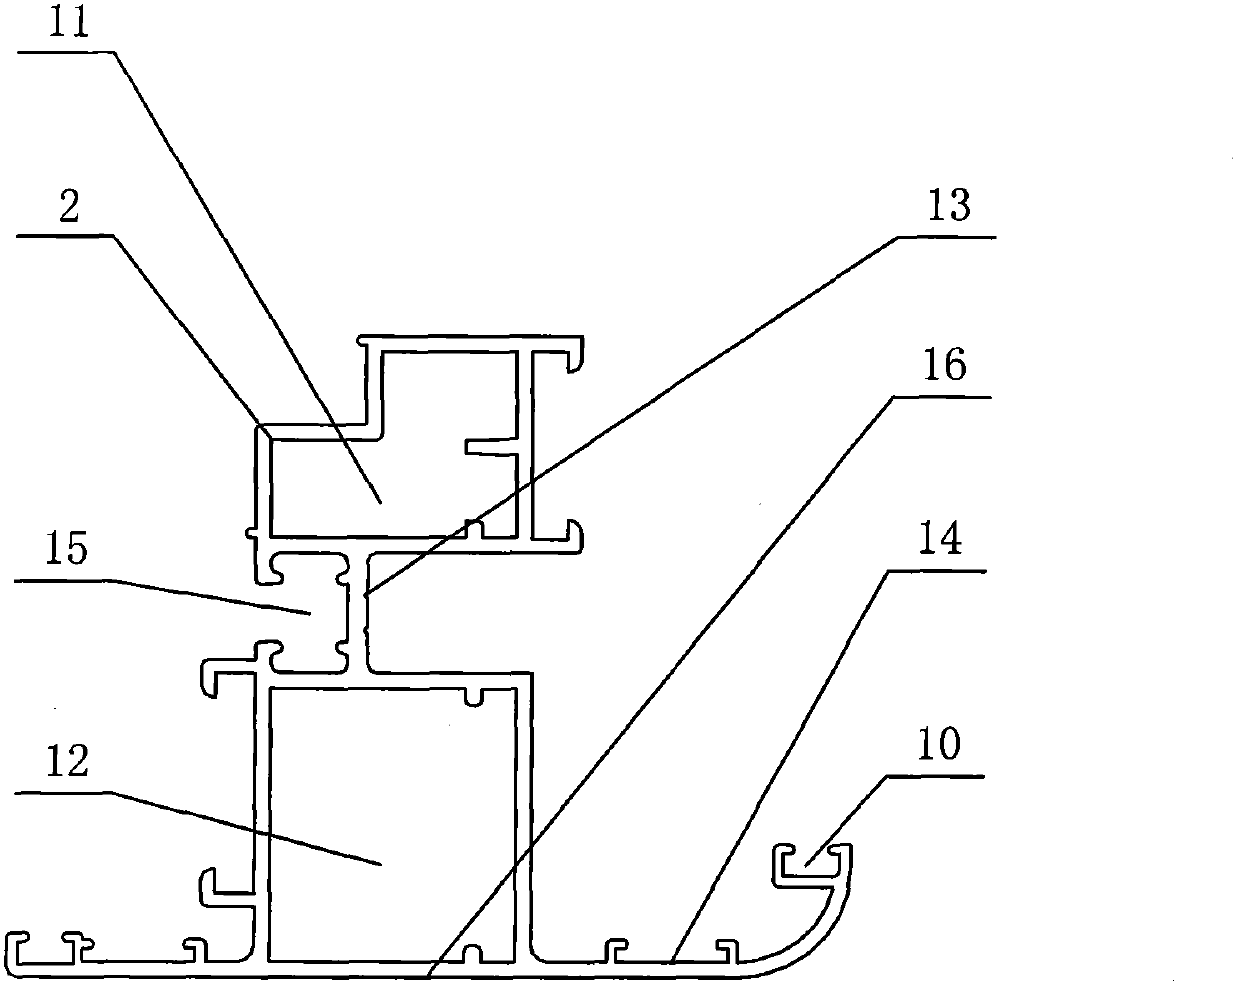 Injected bridge-cutoff aluminum profile used for inswinging casement window